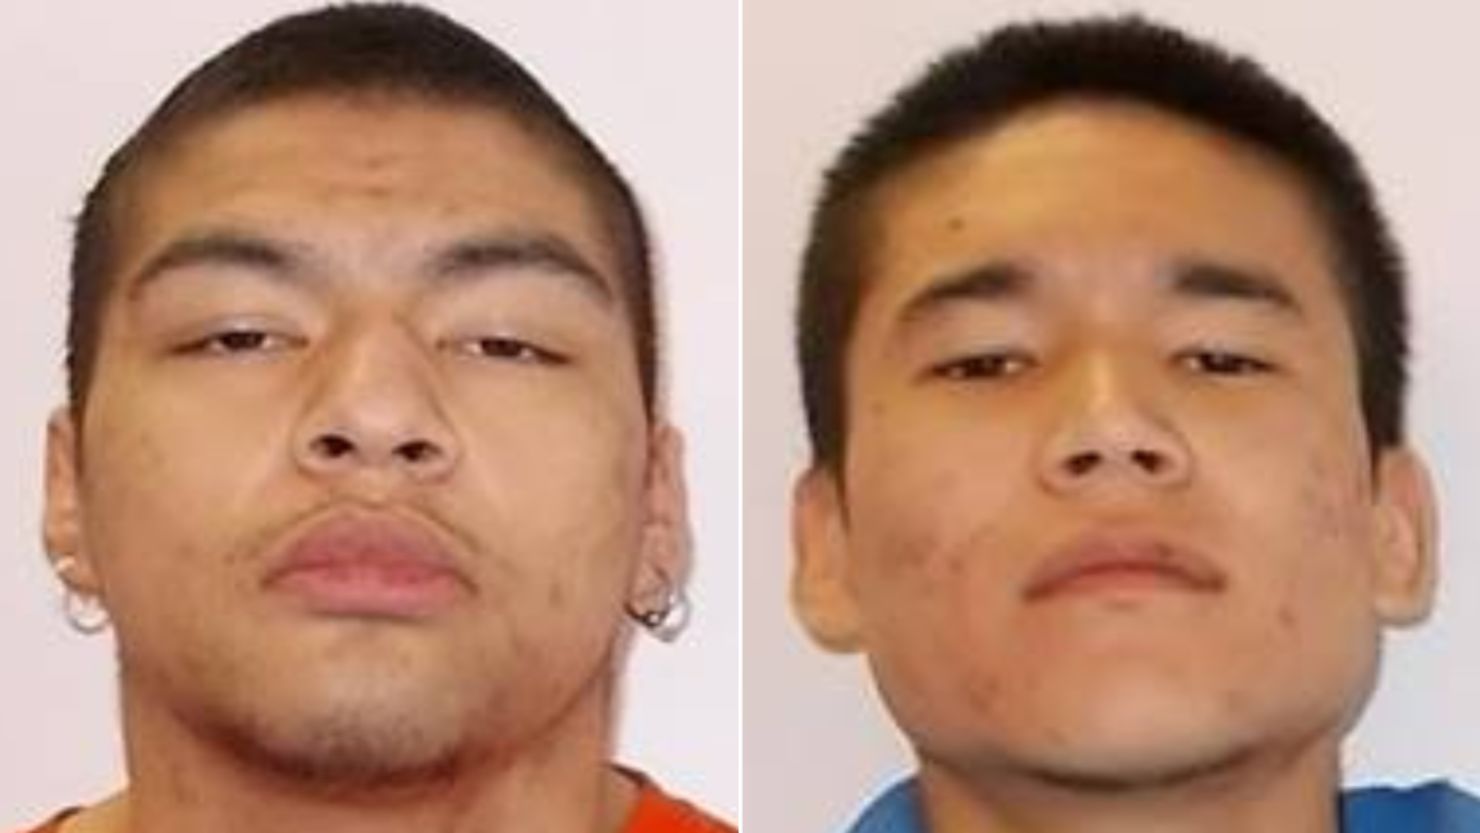  Jesse Dion Favel, left, and Noah James Lemaigre-Elliott escaped a prison in Saskatchewan, police say.